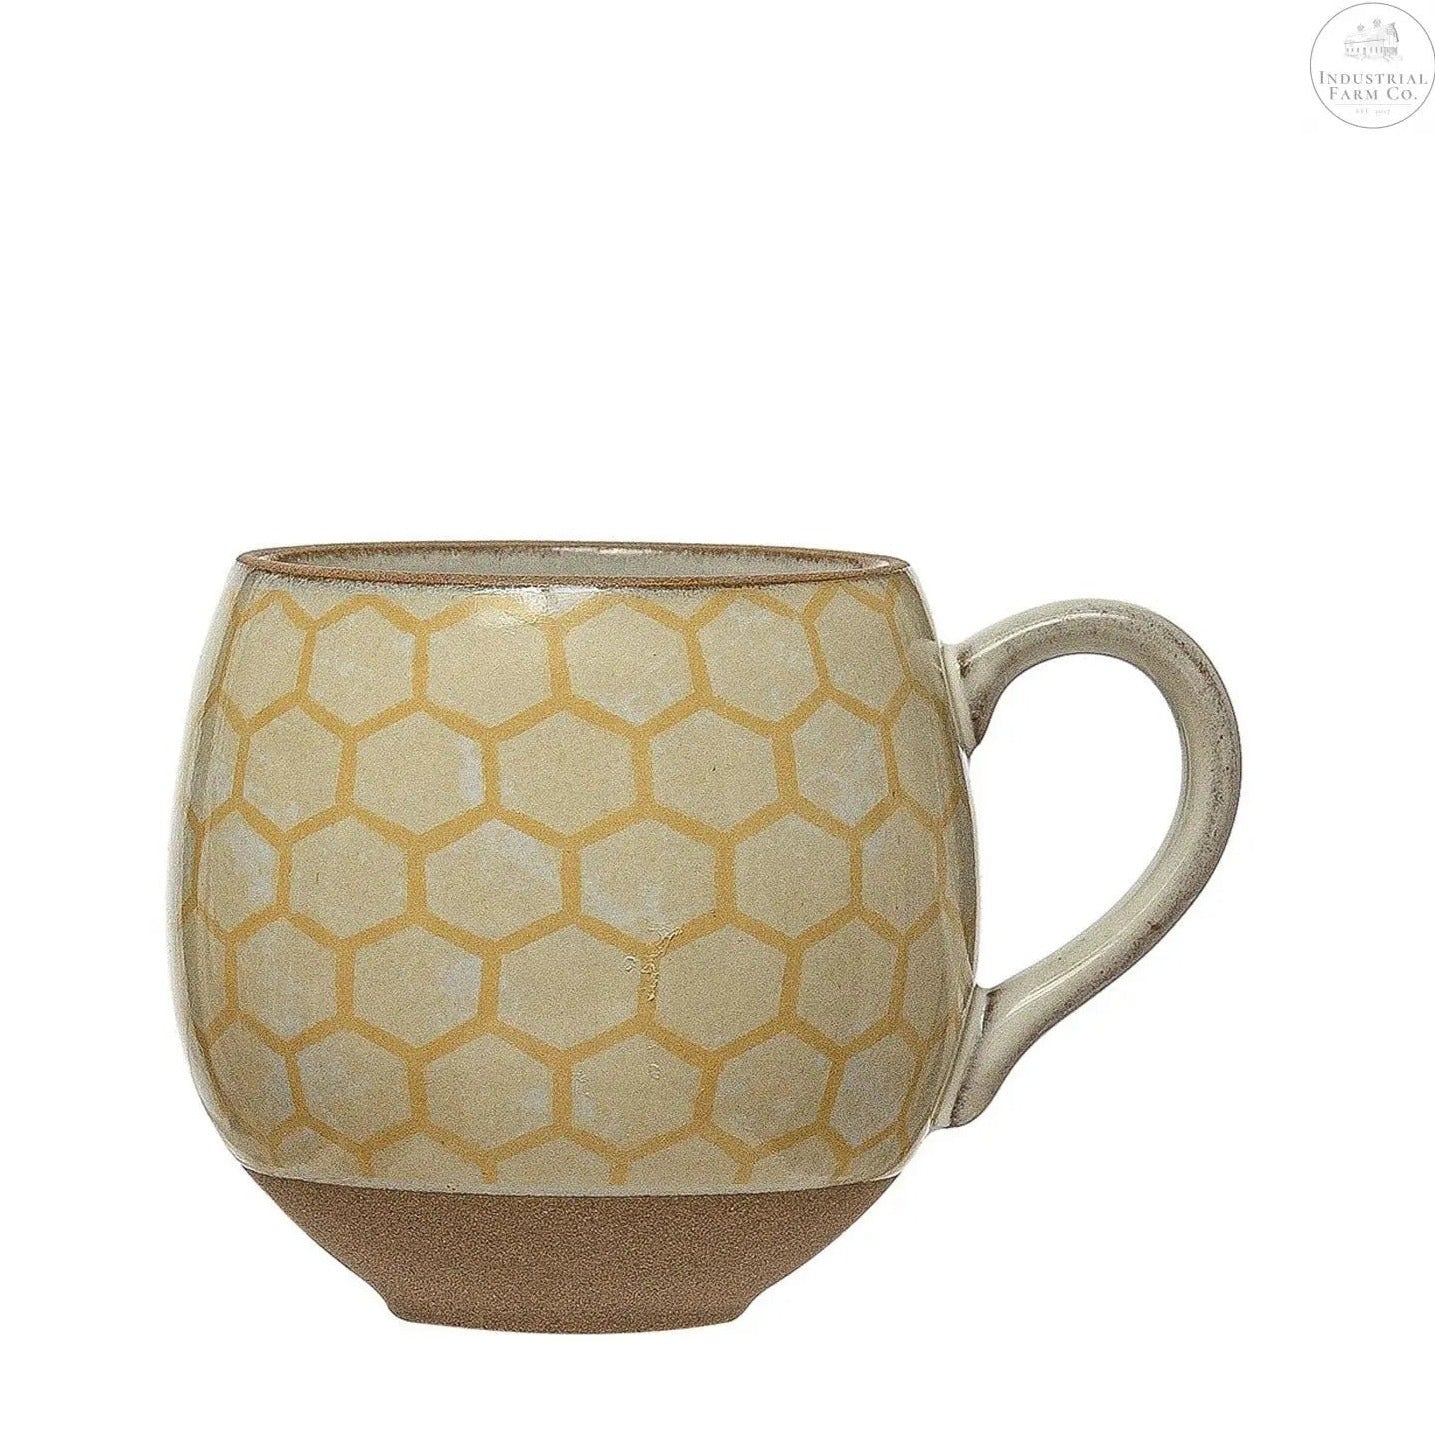 Bee Inspired Spring Mug     | Industrial Farm Co